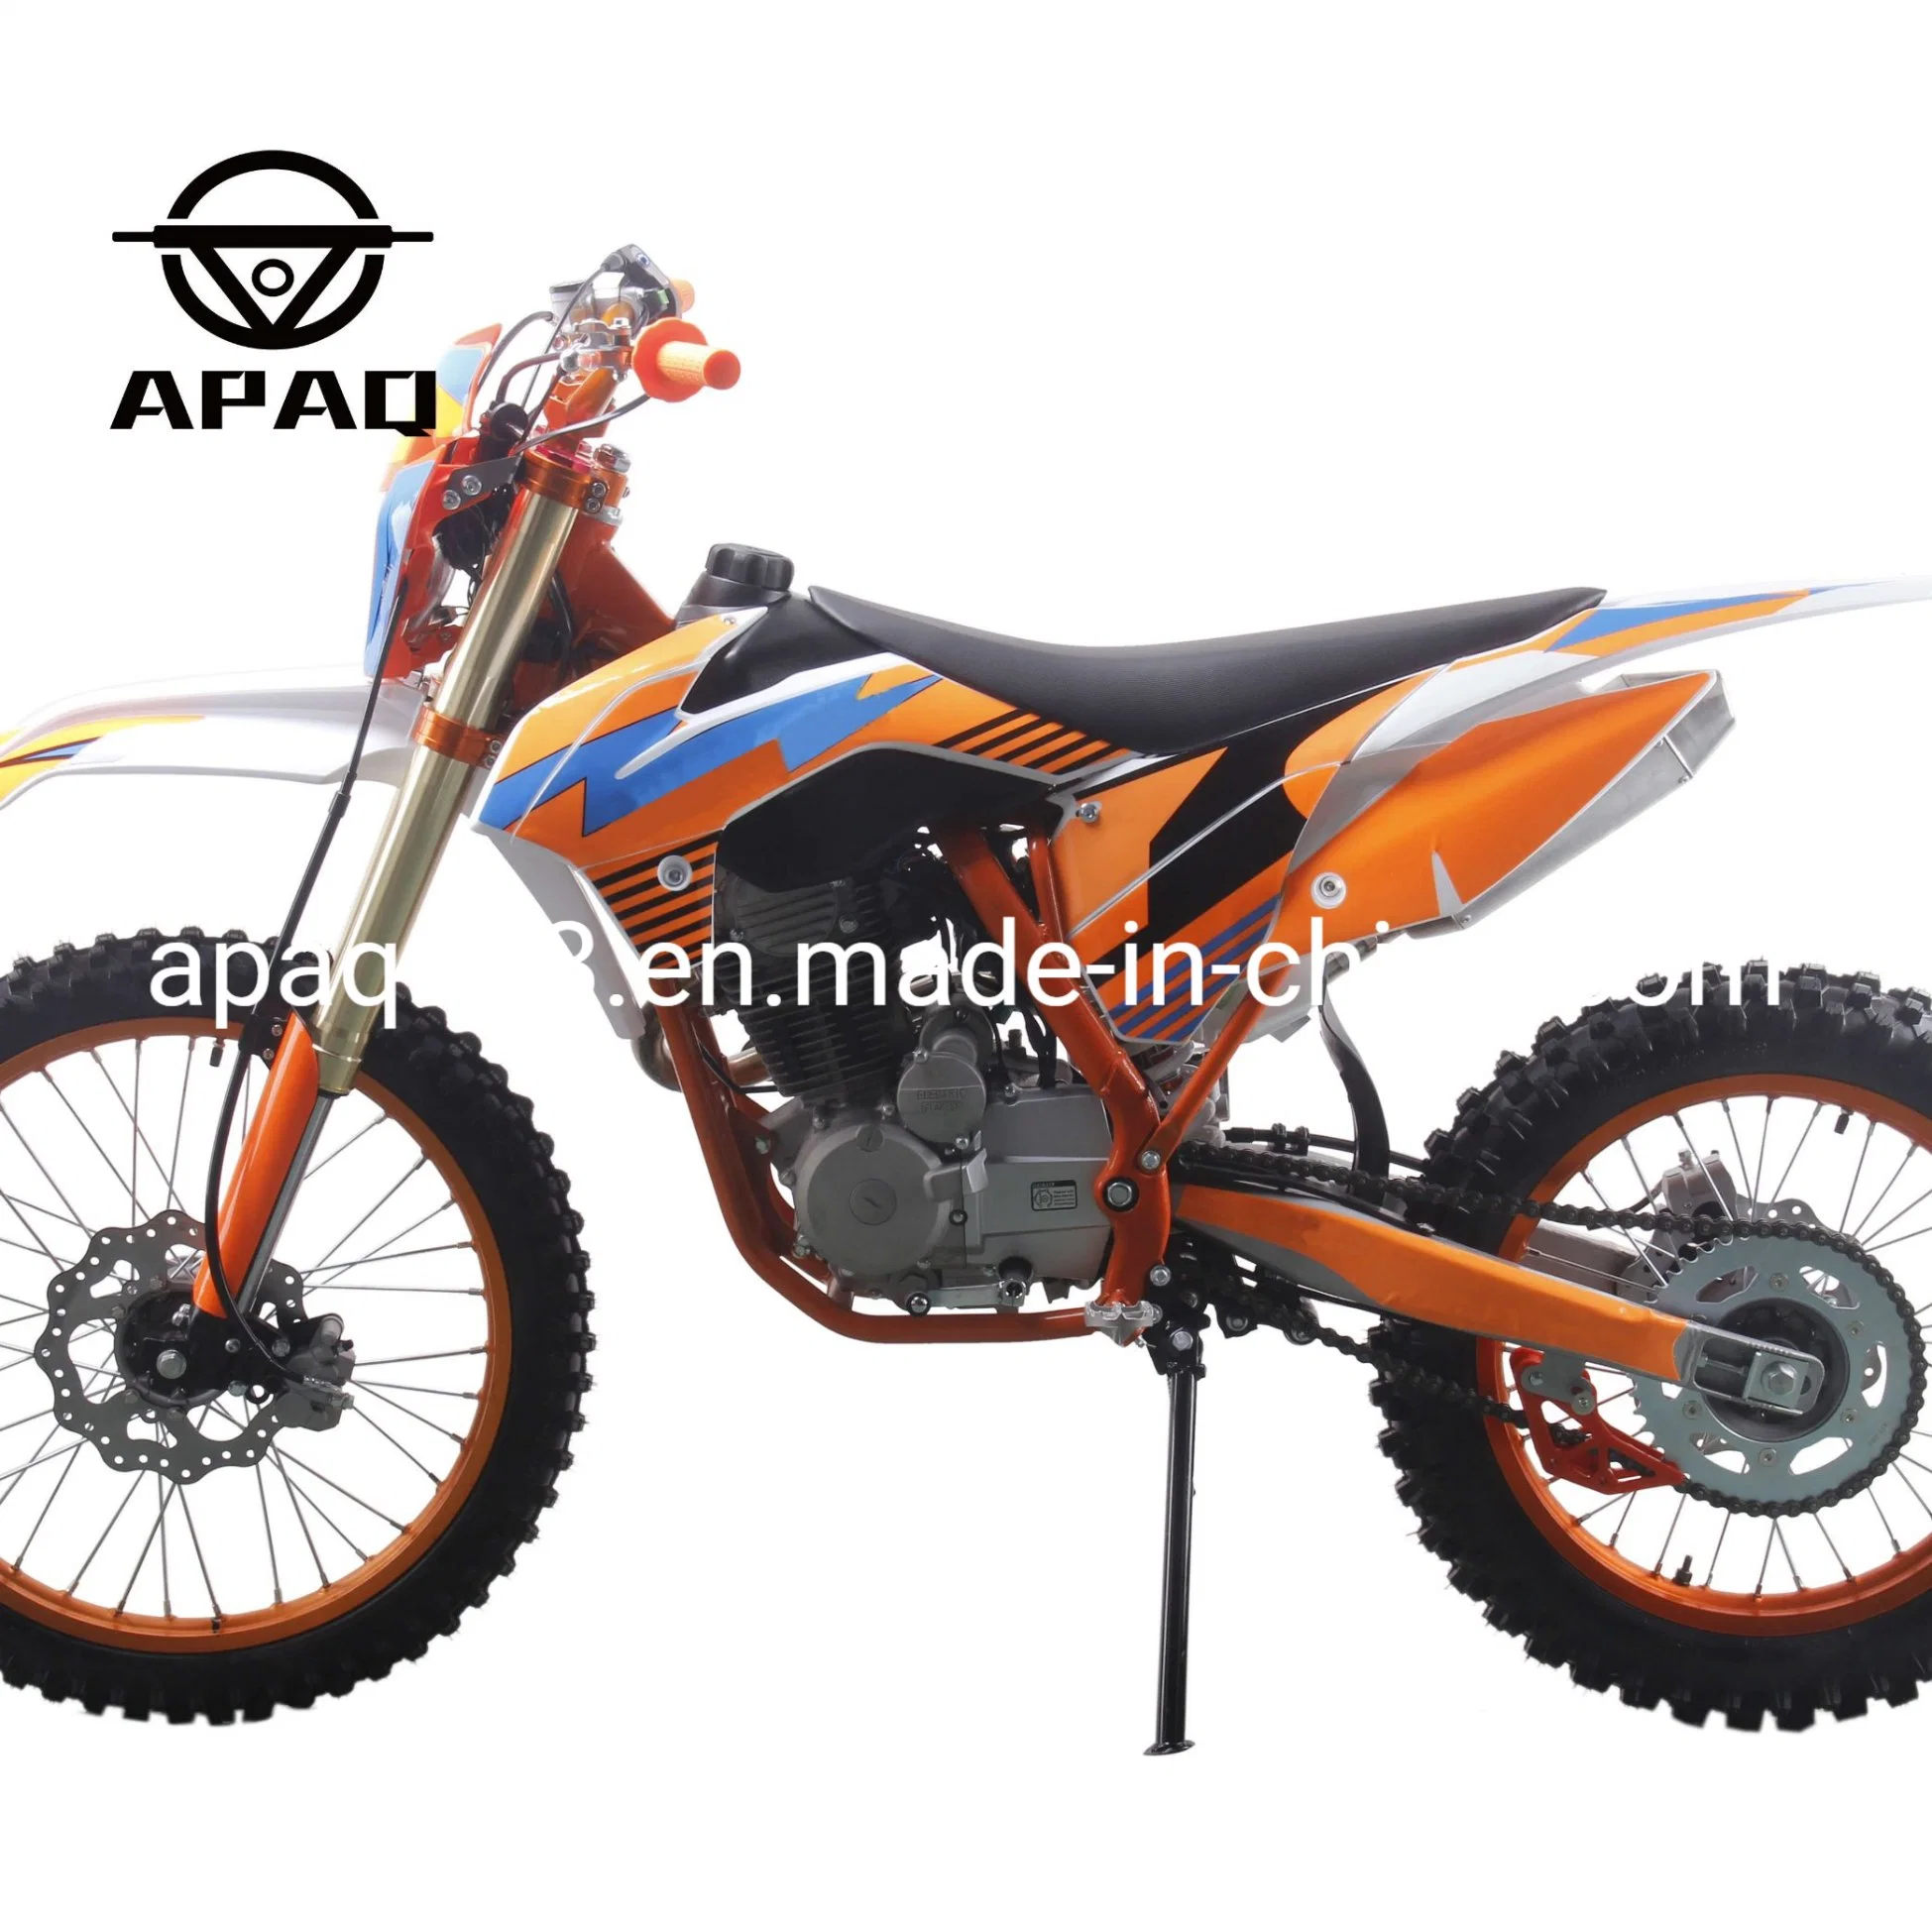 Apaq 150cc 200cc 250cc 300cc Gas off Road Other Motorcycle Motorbike Dirt Bike Moto Cross Motocross for Adult